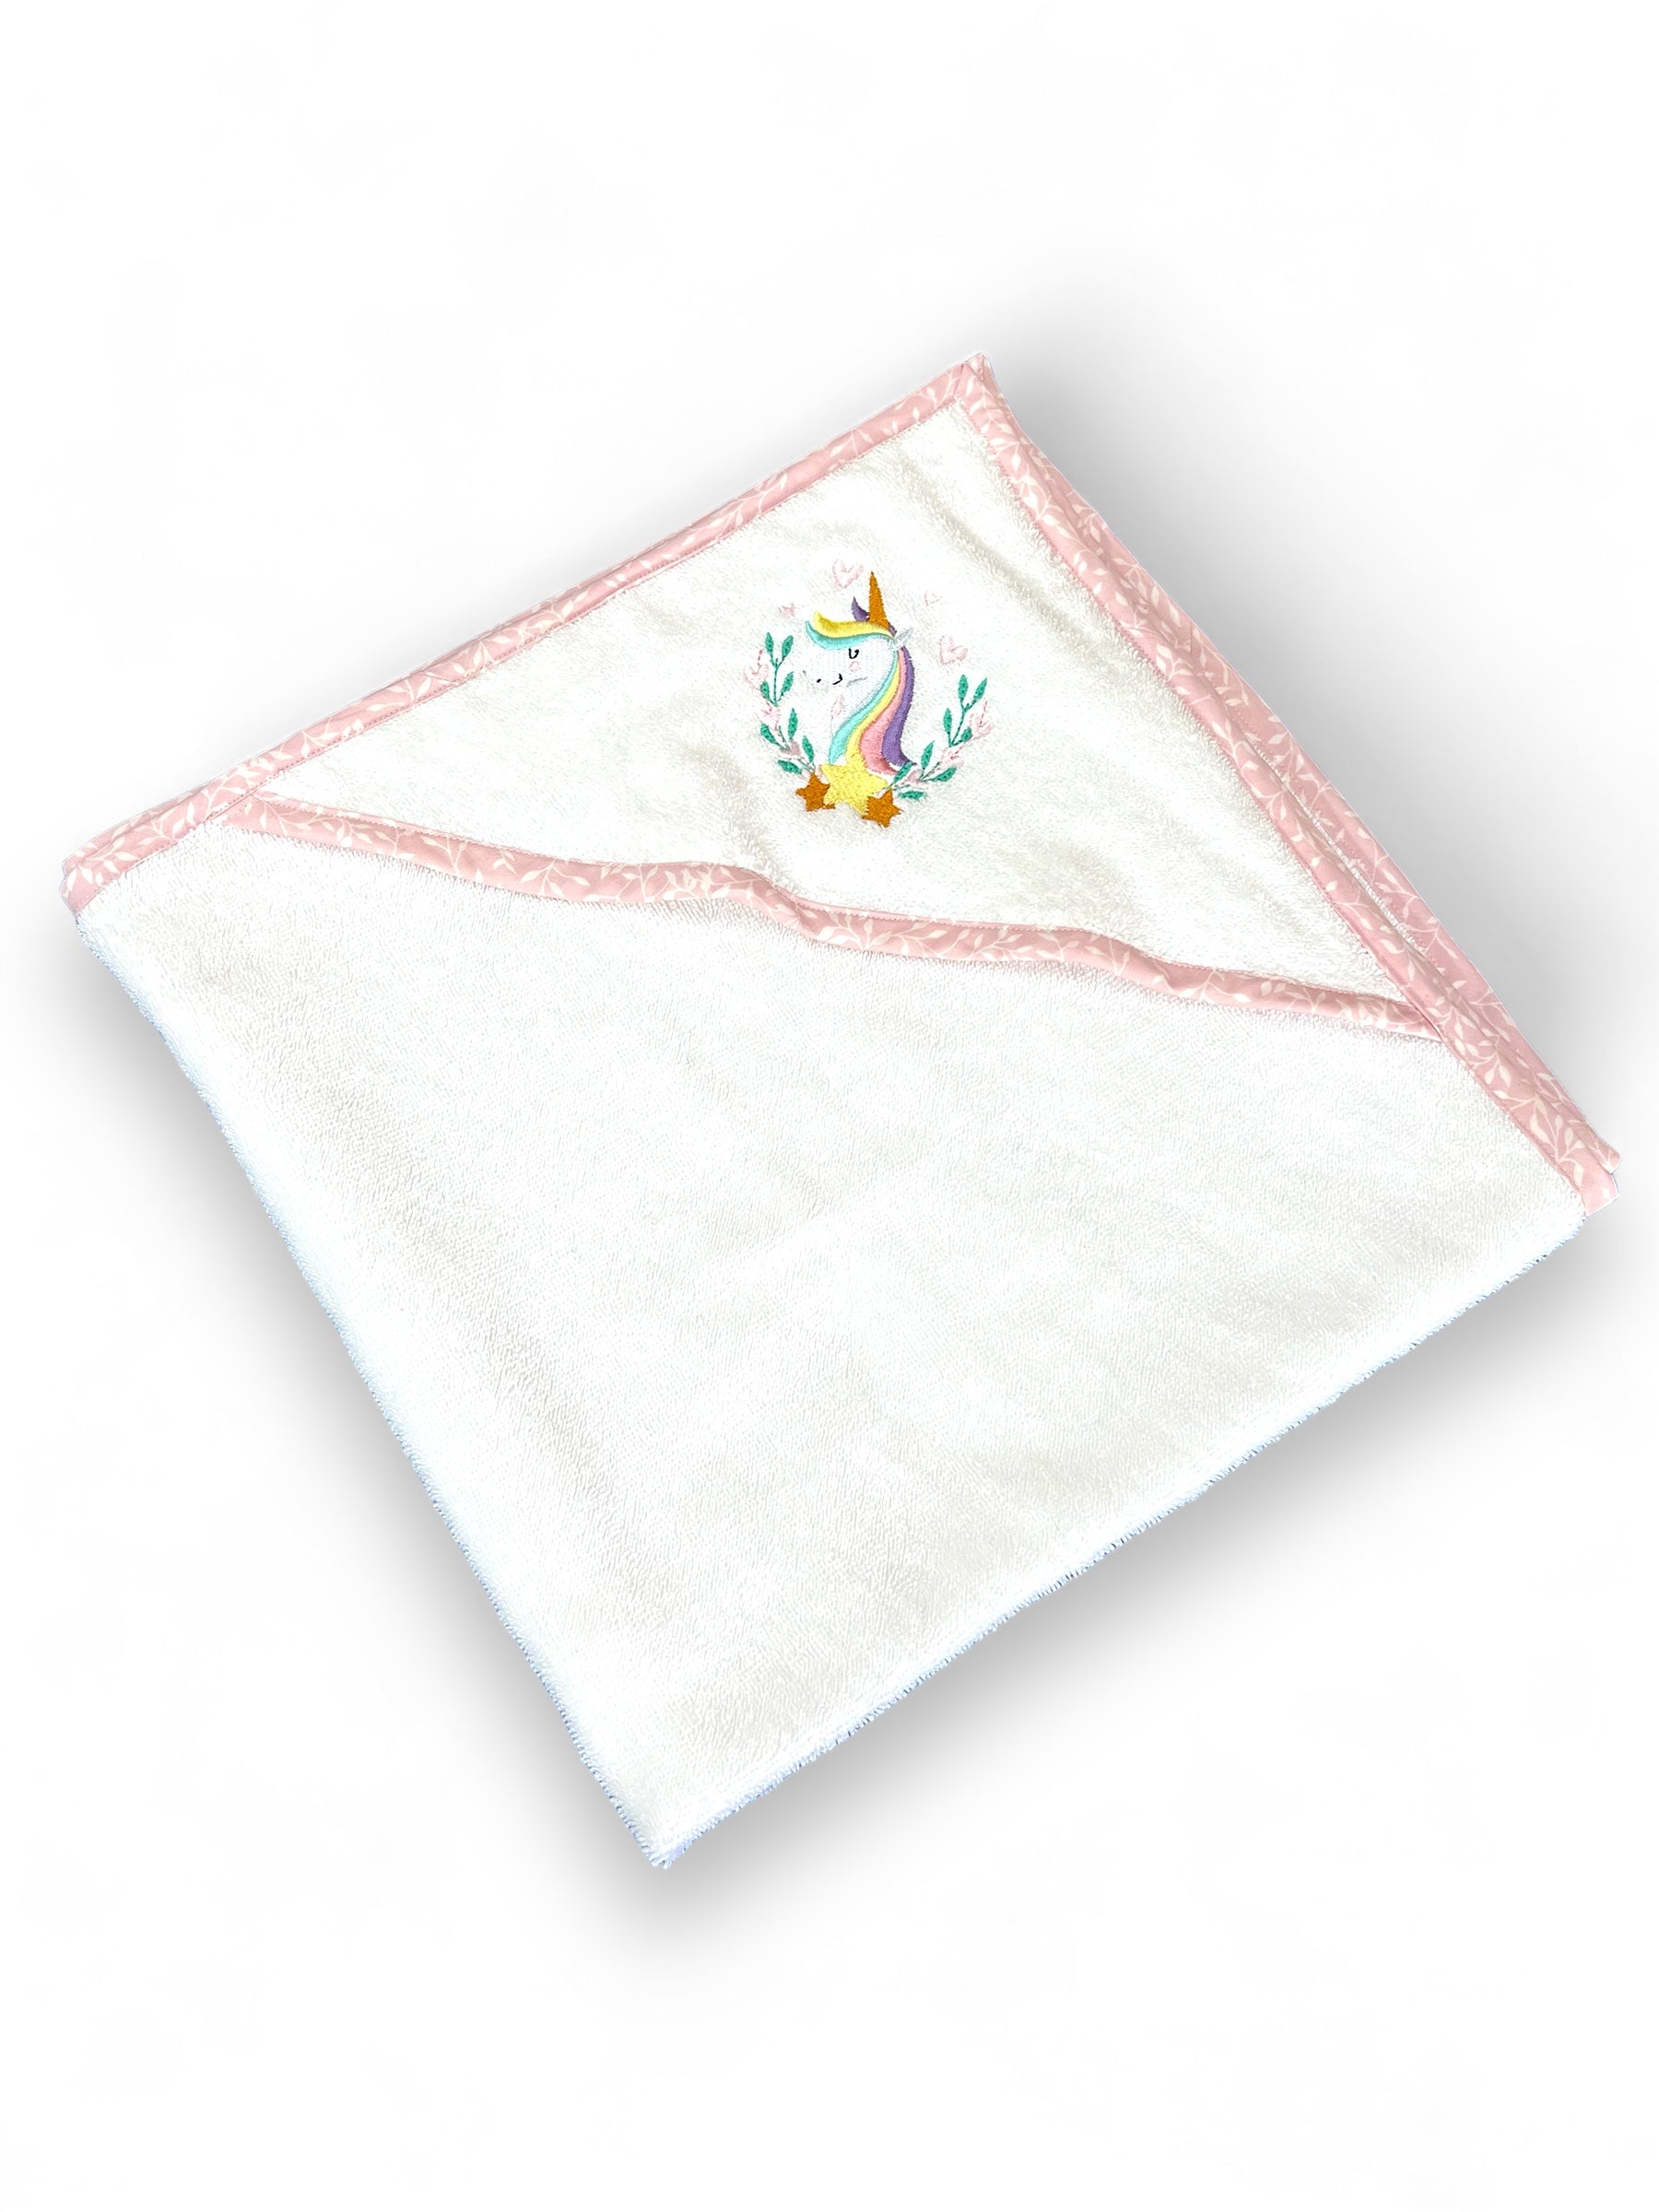 Embroidery hooded Baby towel Unicorn 